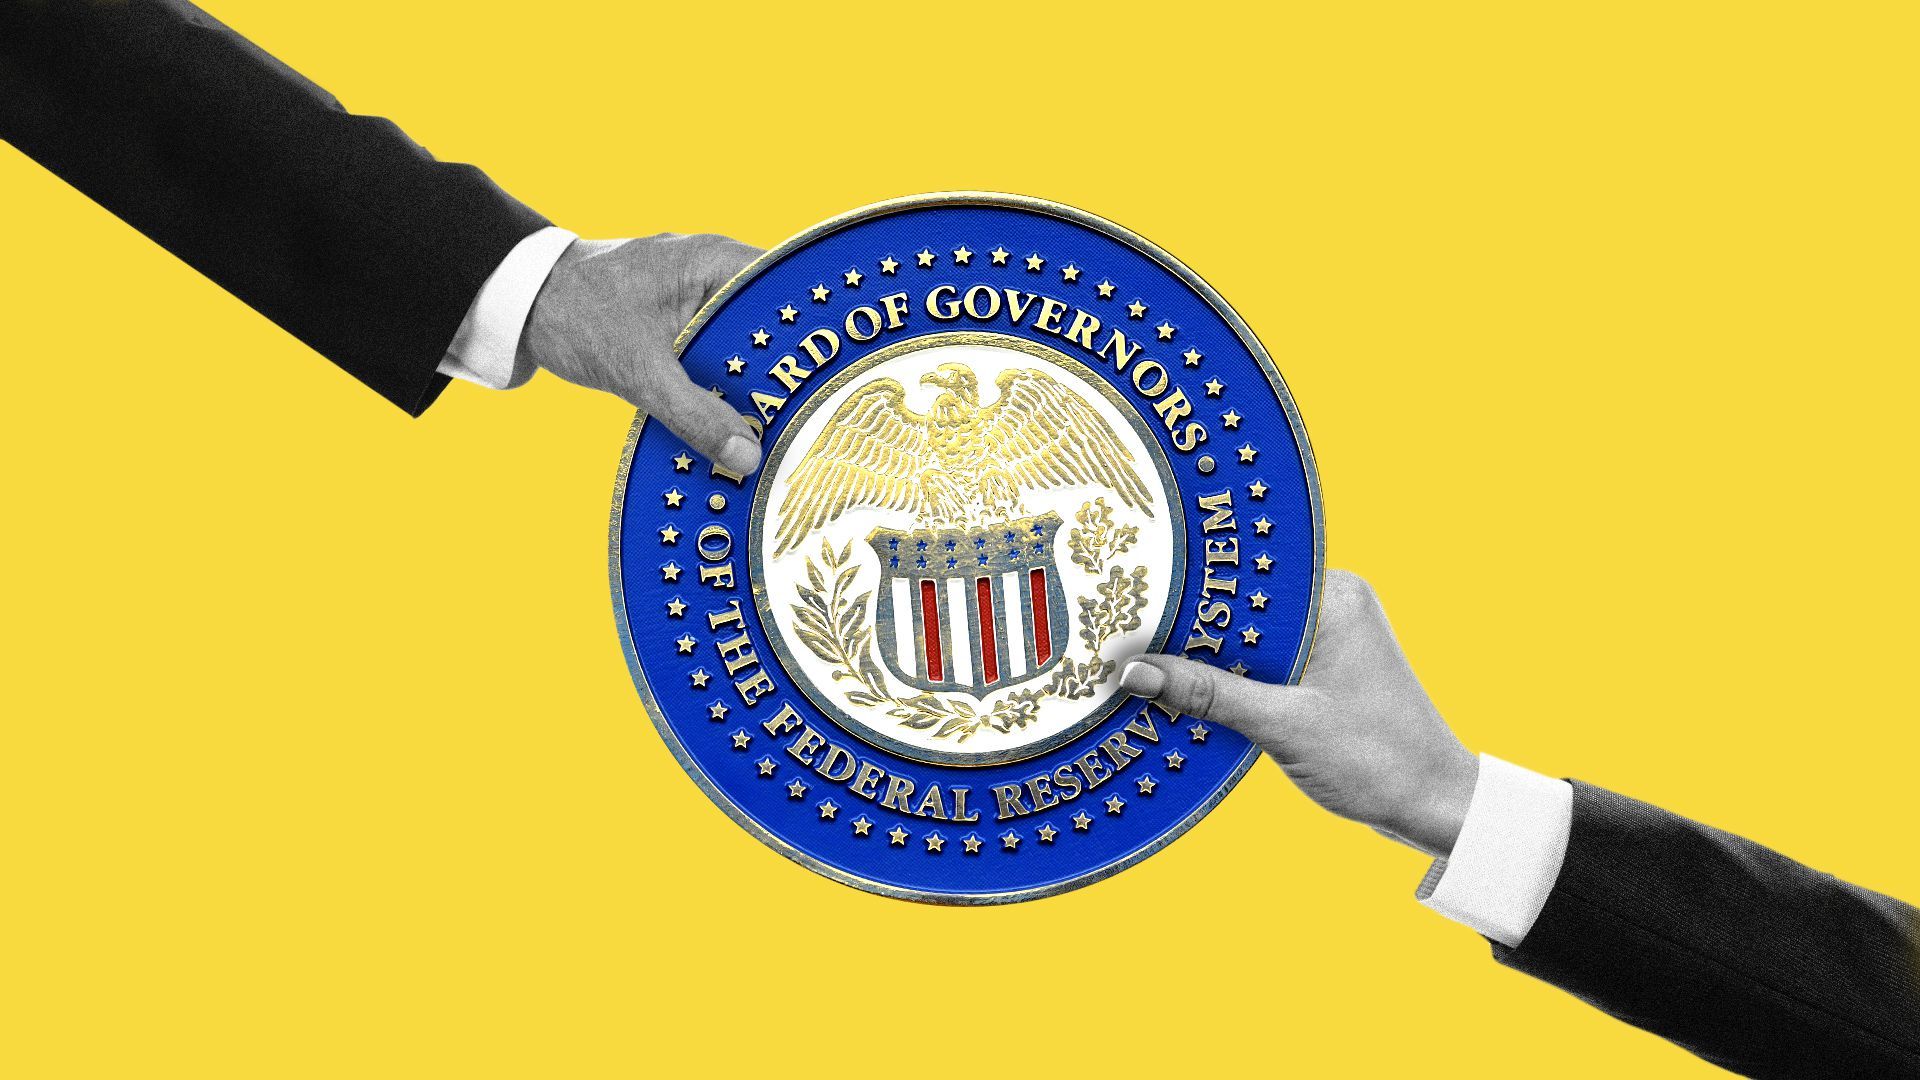 Illustration of hands pulling on Fed seal